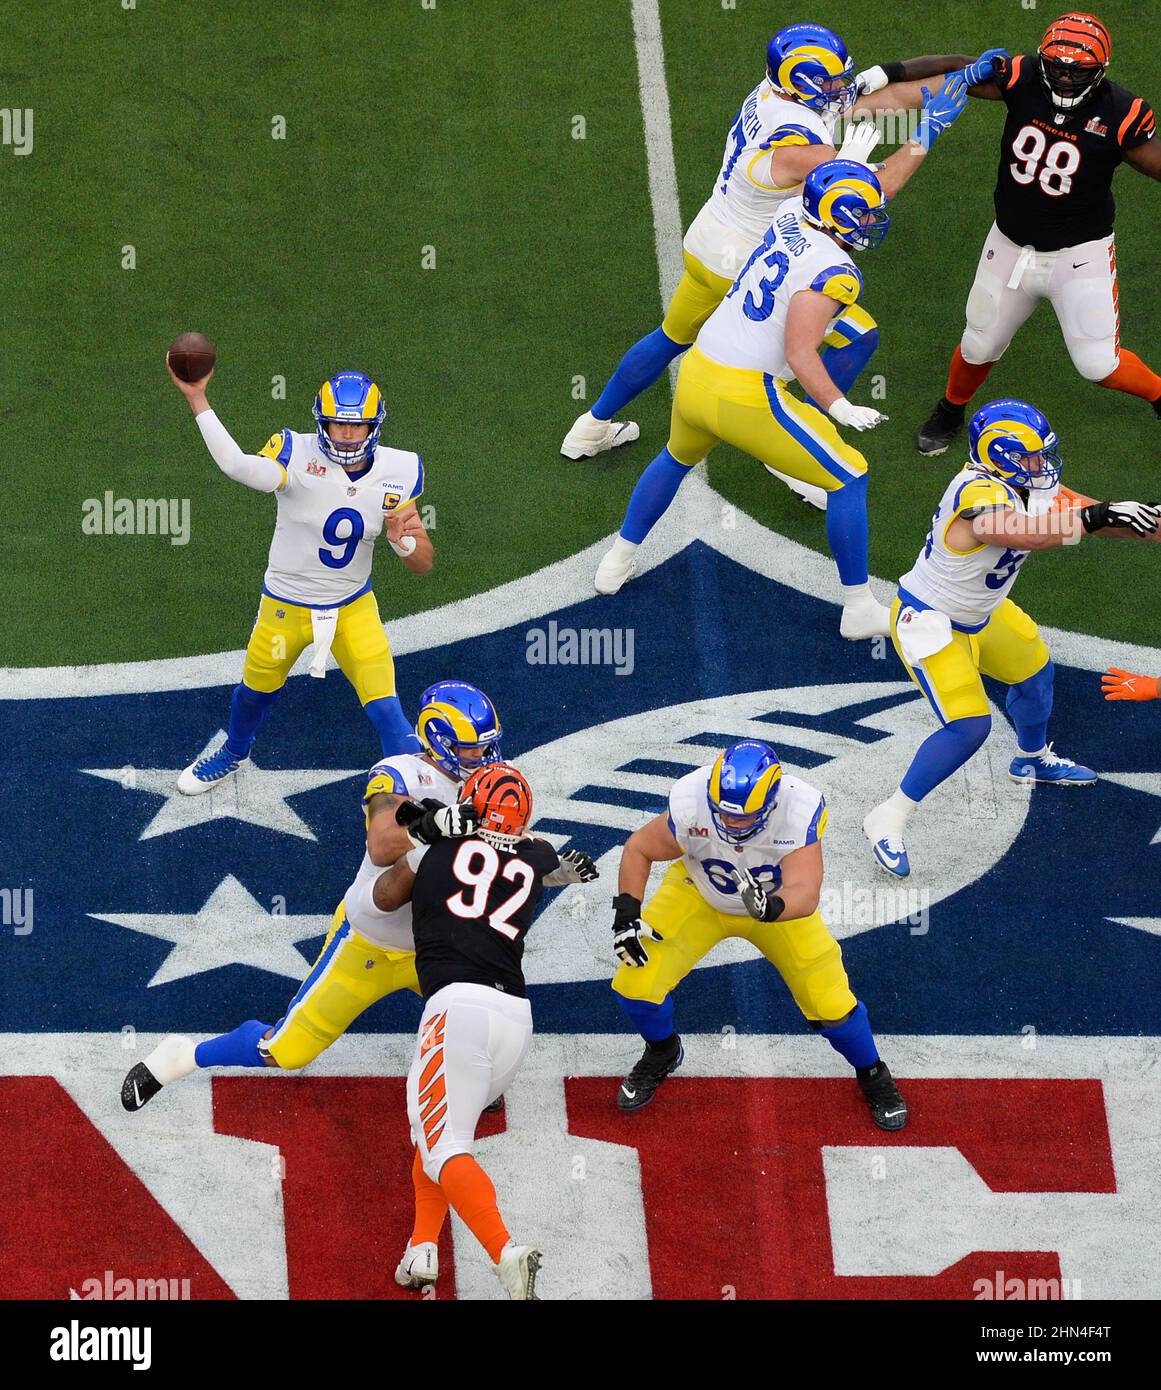 Los Angeles, USA. 14th. Februar 2022. Los Angeles Rams' Stafford tritt beim NFL Super Bowl LVI-Spiel zwischen Cincinnati Bengals und Los Angeles Rams im SoFi Stadium in Los Angeles, USA, am 13. Februar 2022 an. Quelle: Xinhua/Alamy Live News Stockfoto